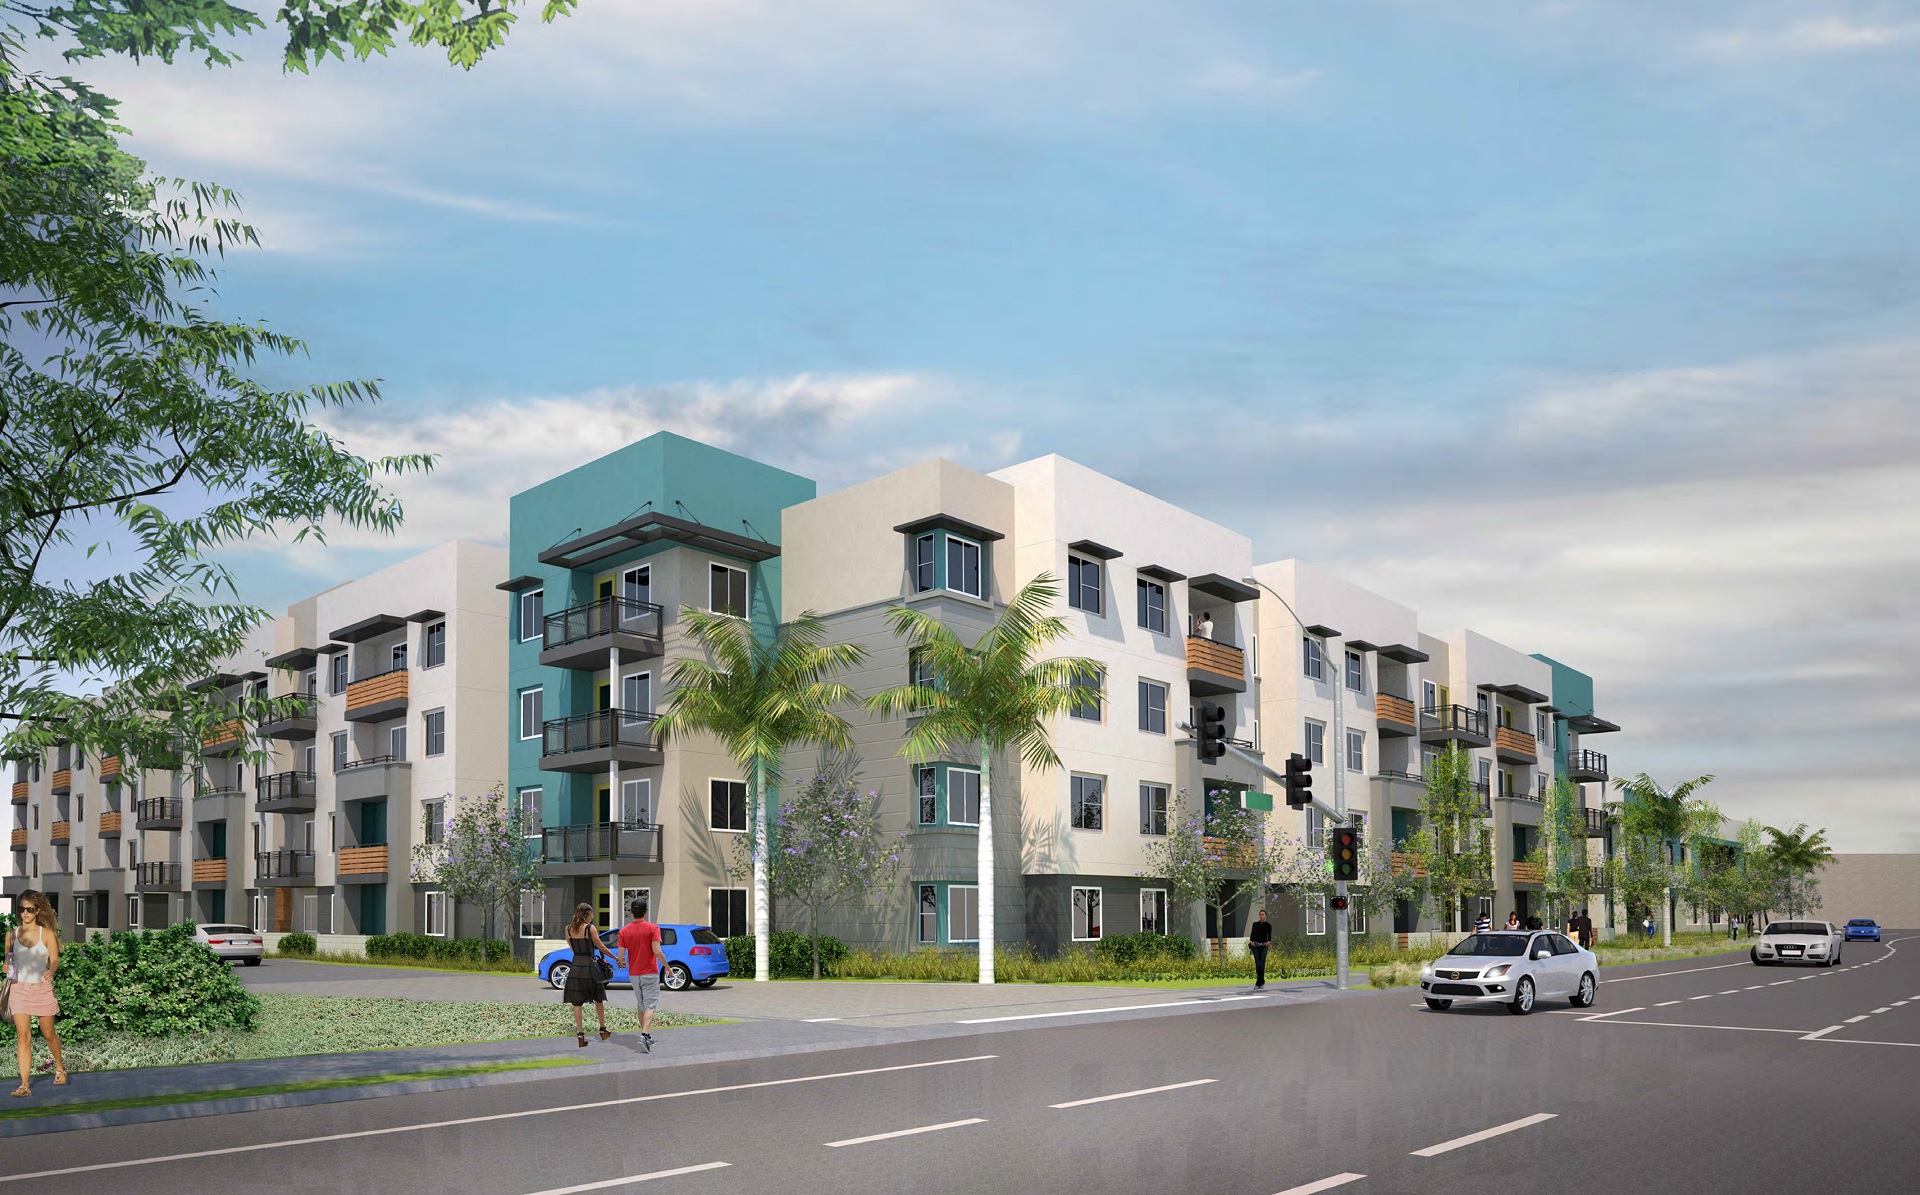 102 Unit Affordable Housing Complex Planned In Anaheim Urbanize La